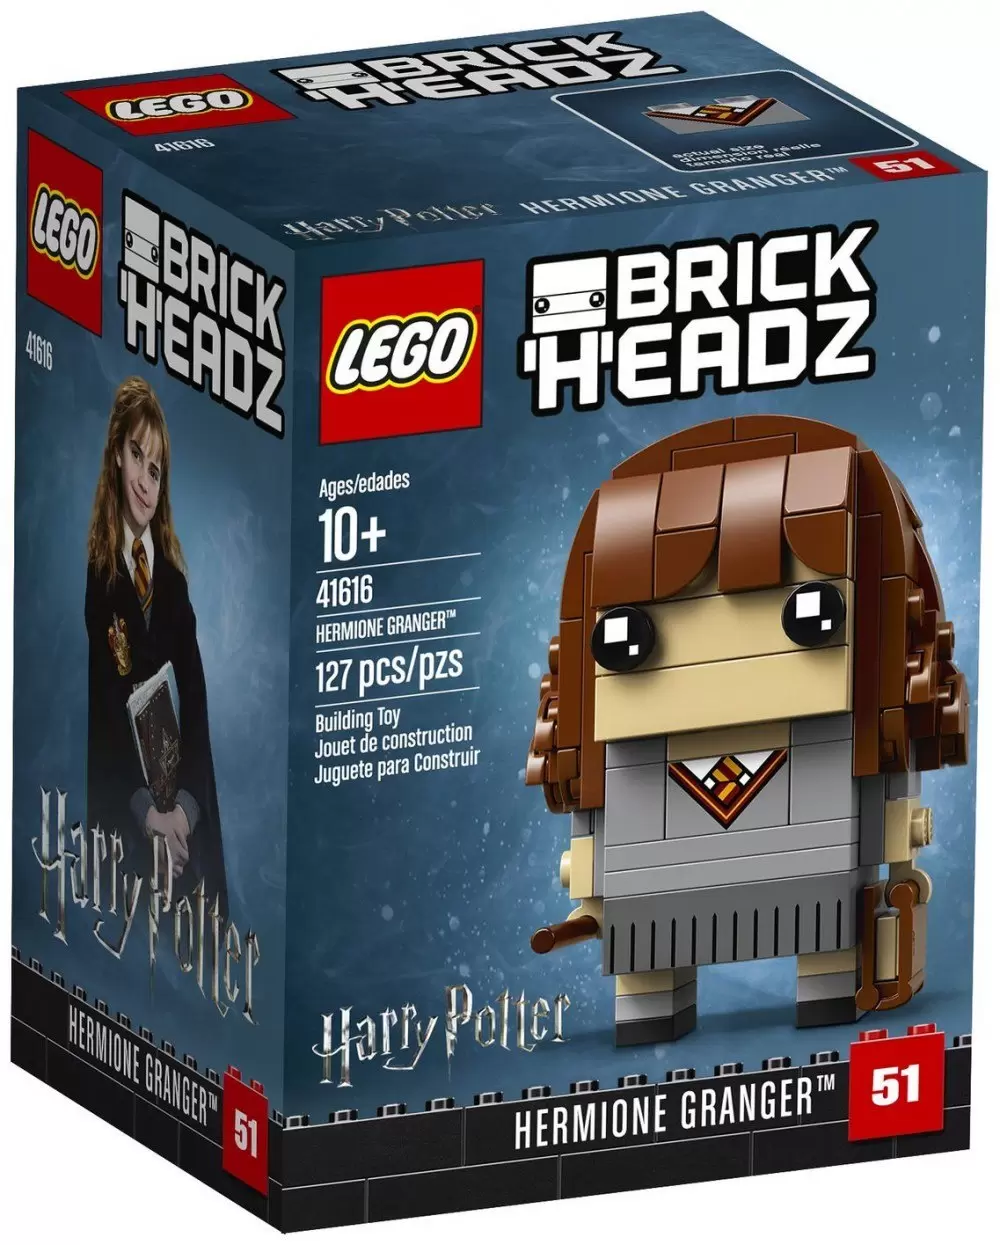 LEGO BrickHeadz - 51 - Hermione Granger